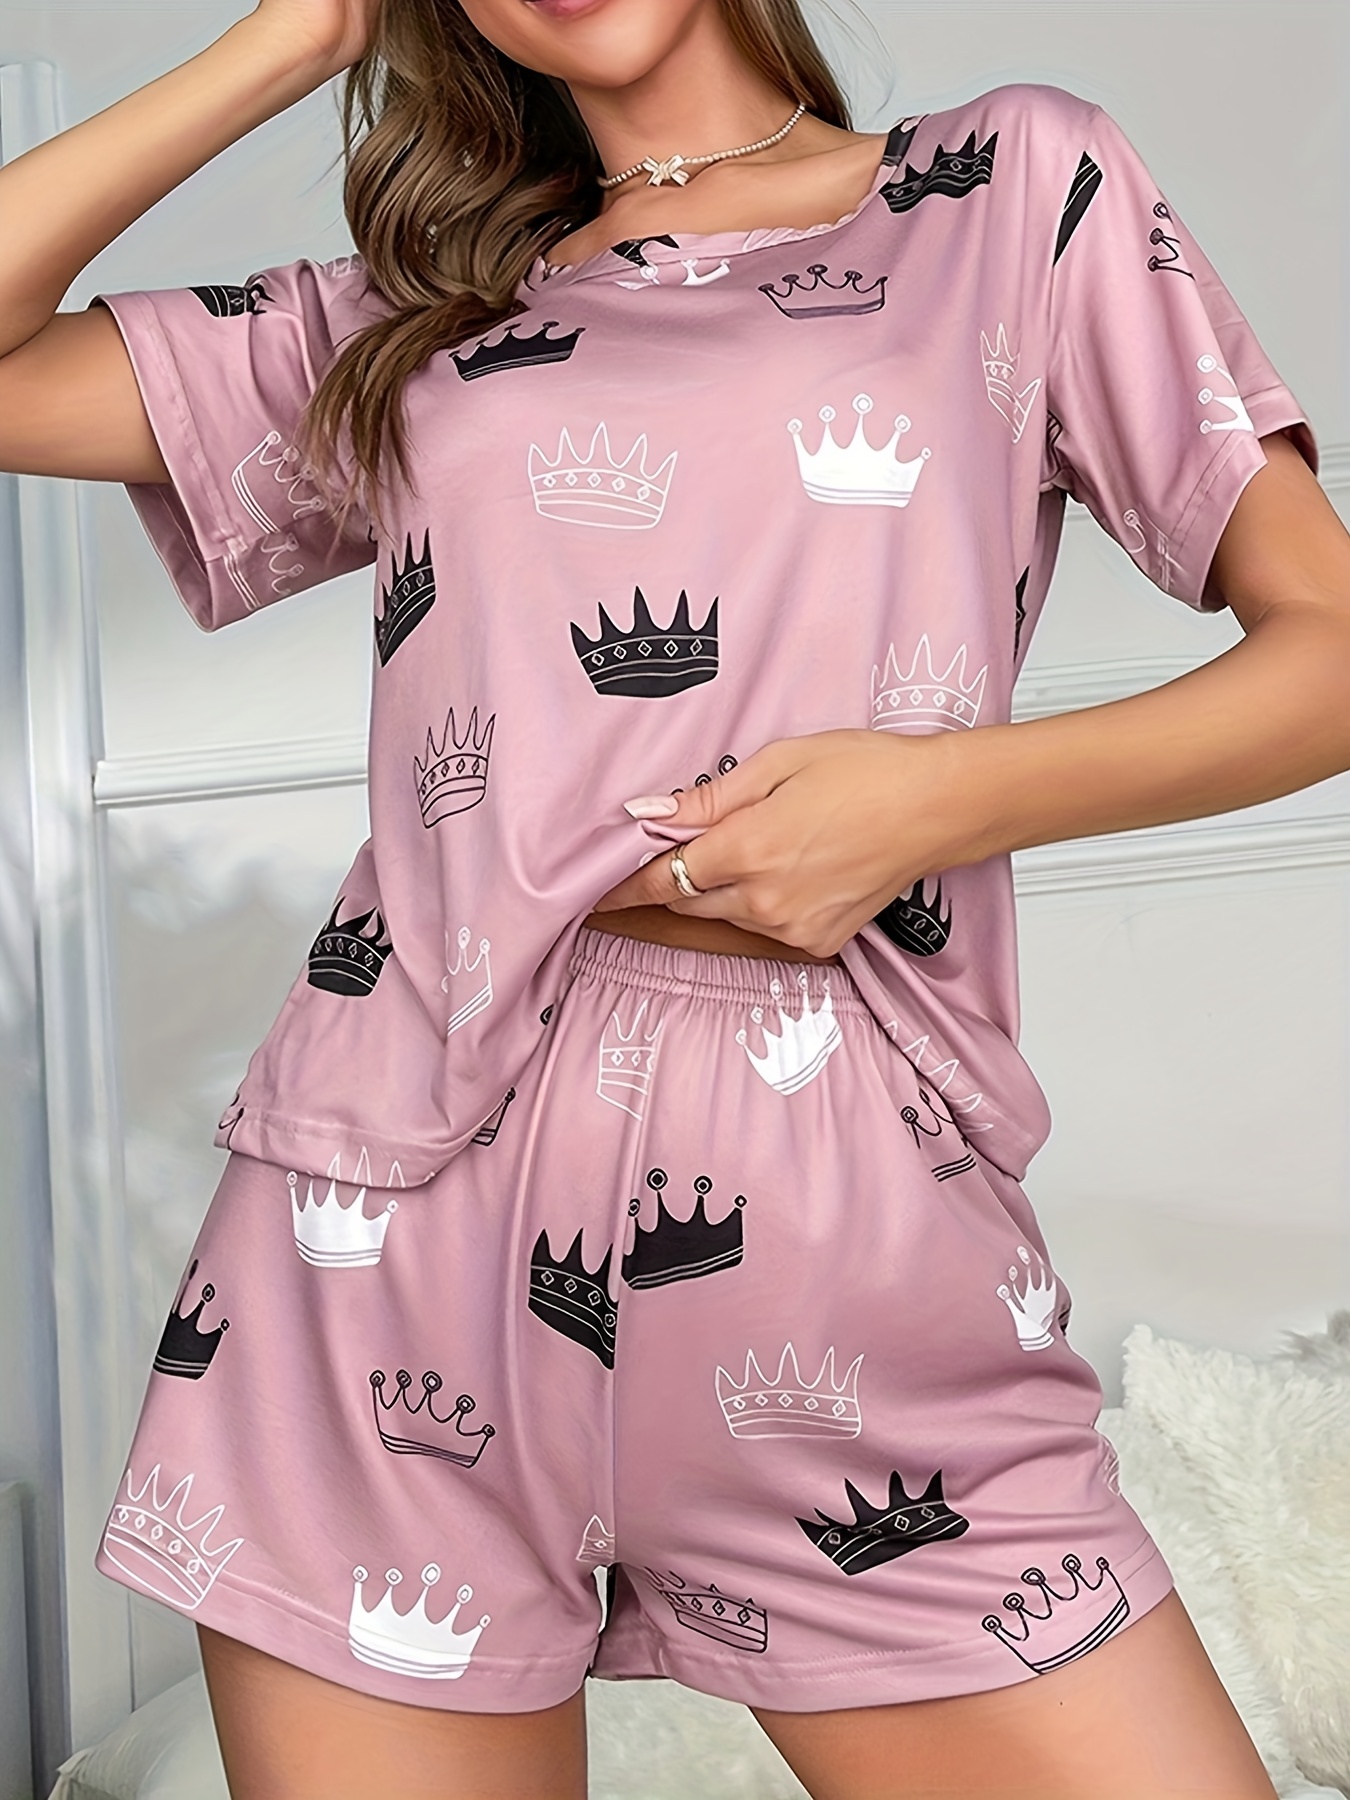 Women's Sleepwear - Boxers, Pajamas, & Tops